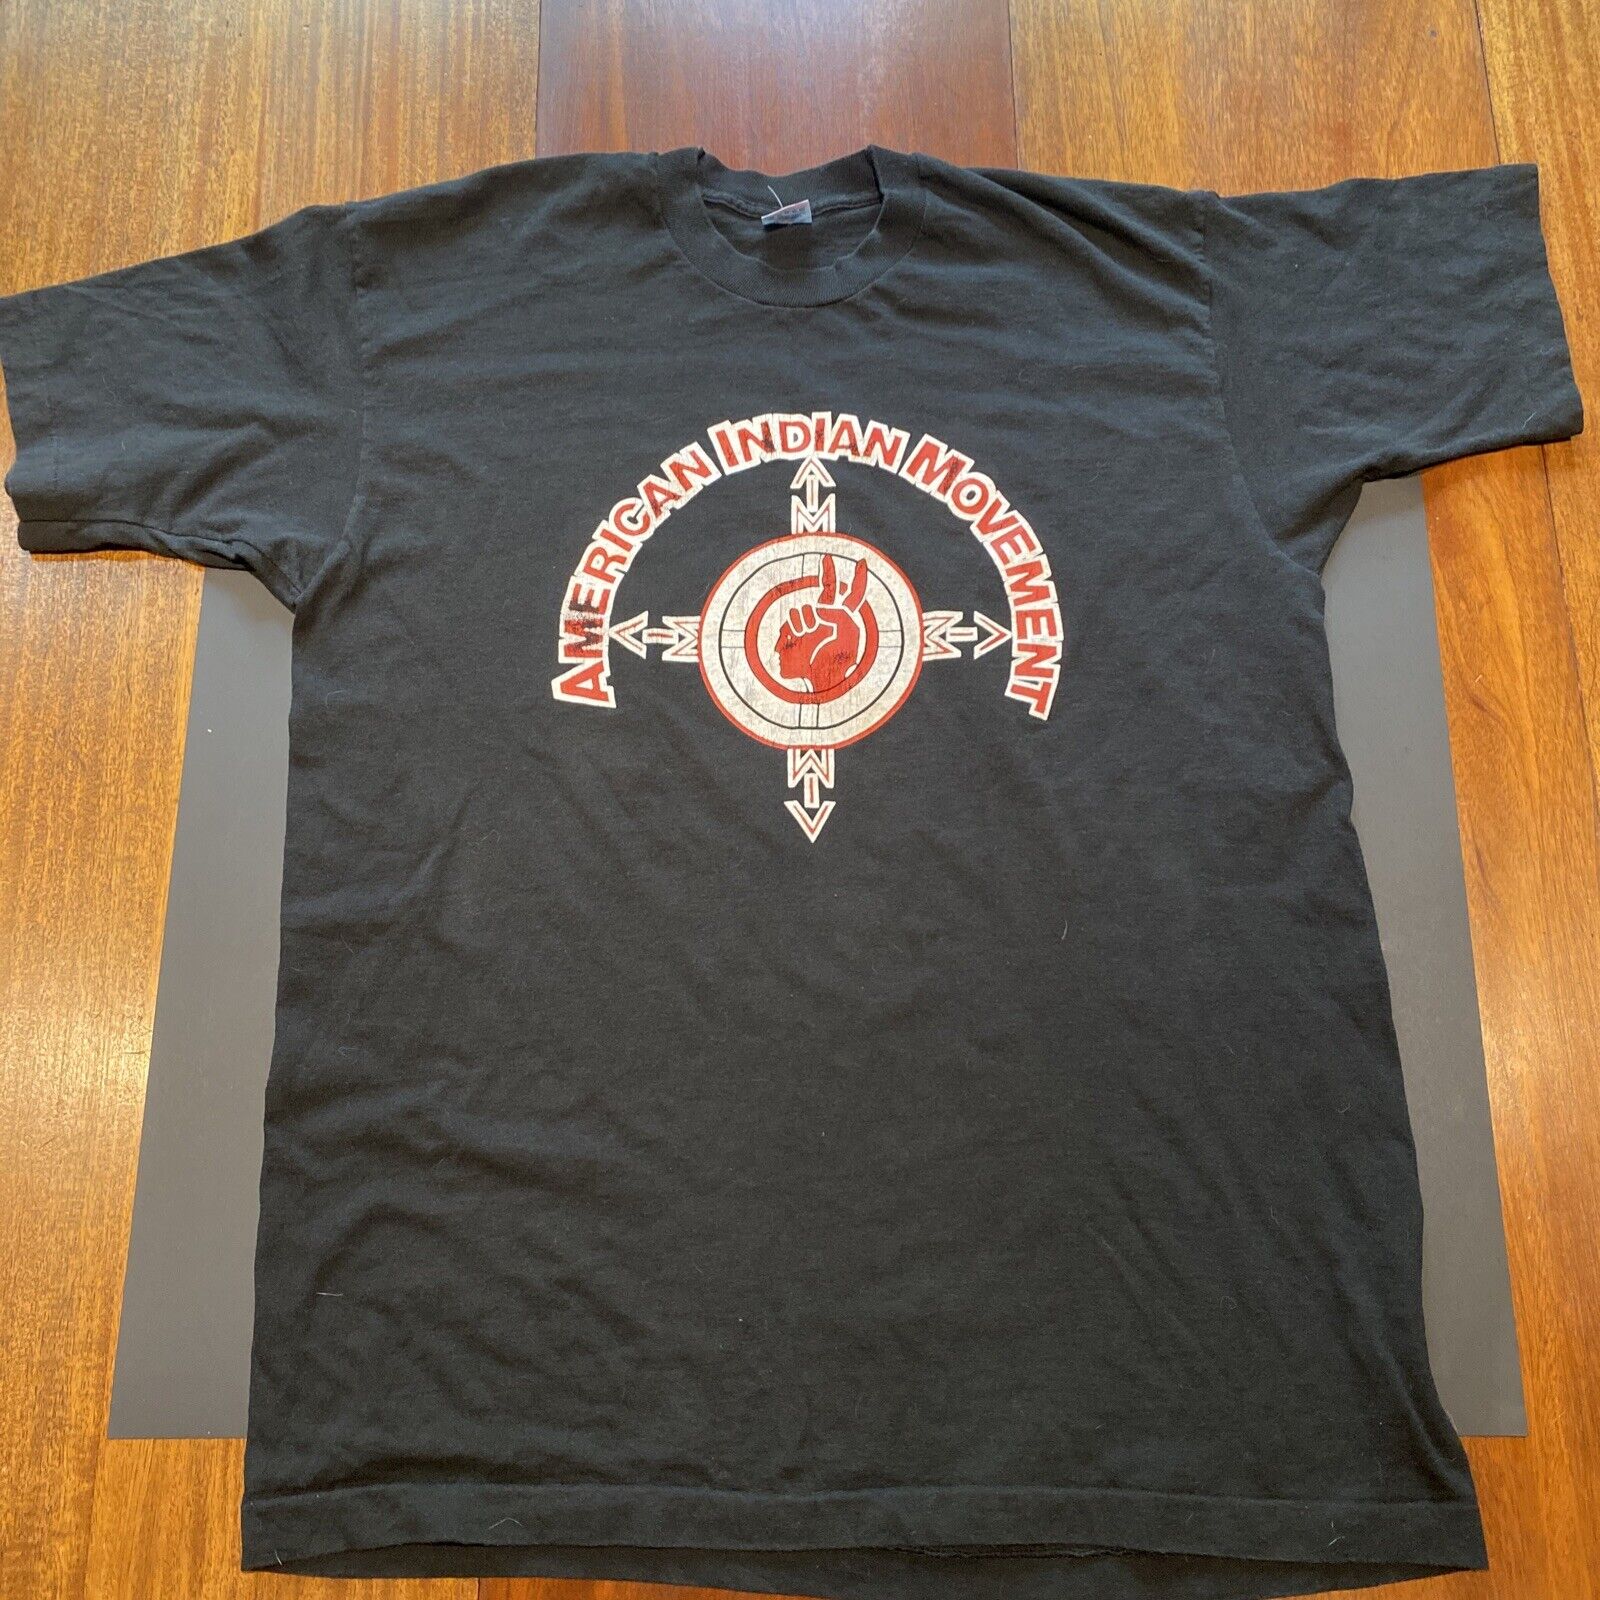 Vintage Rare 90s Free Leonard Peltier AIM T-Shirt XL American Indian Movement